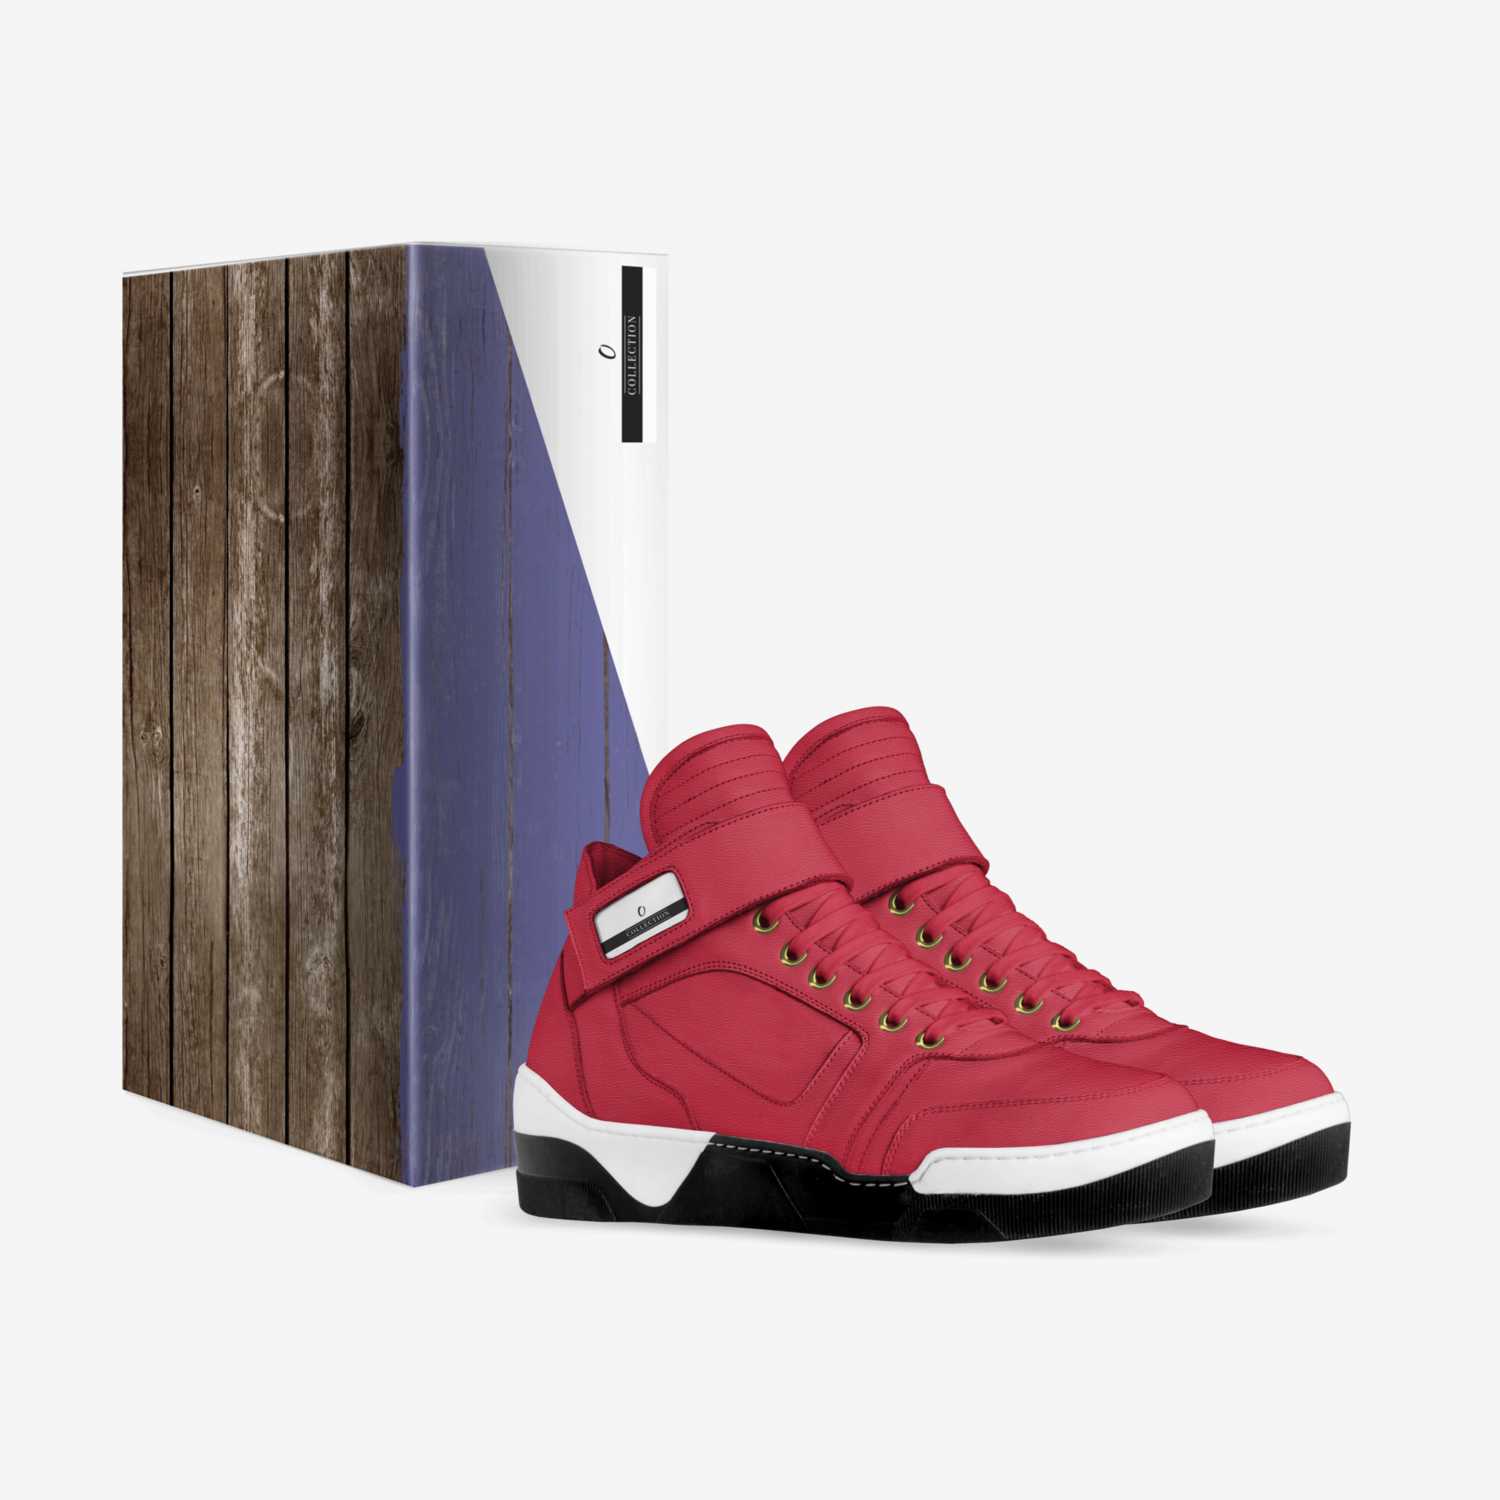 O custom made in Italy shoes by Brady Oxborrow | Box view